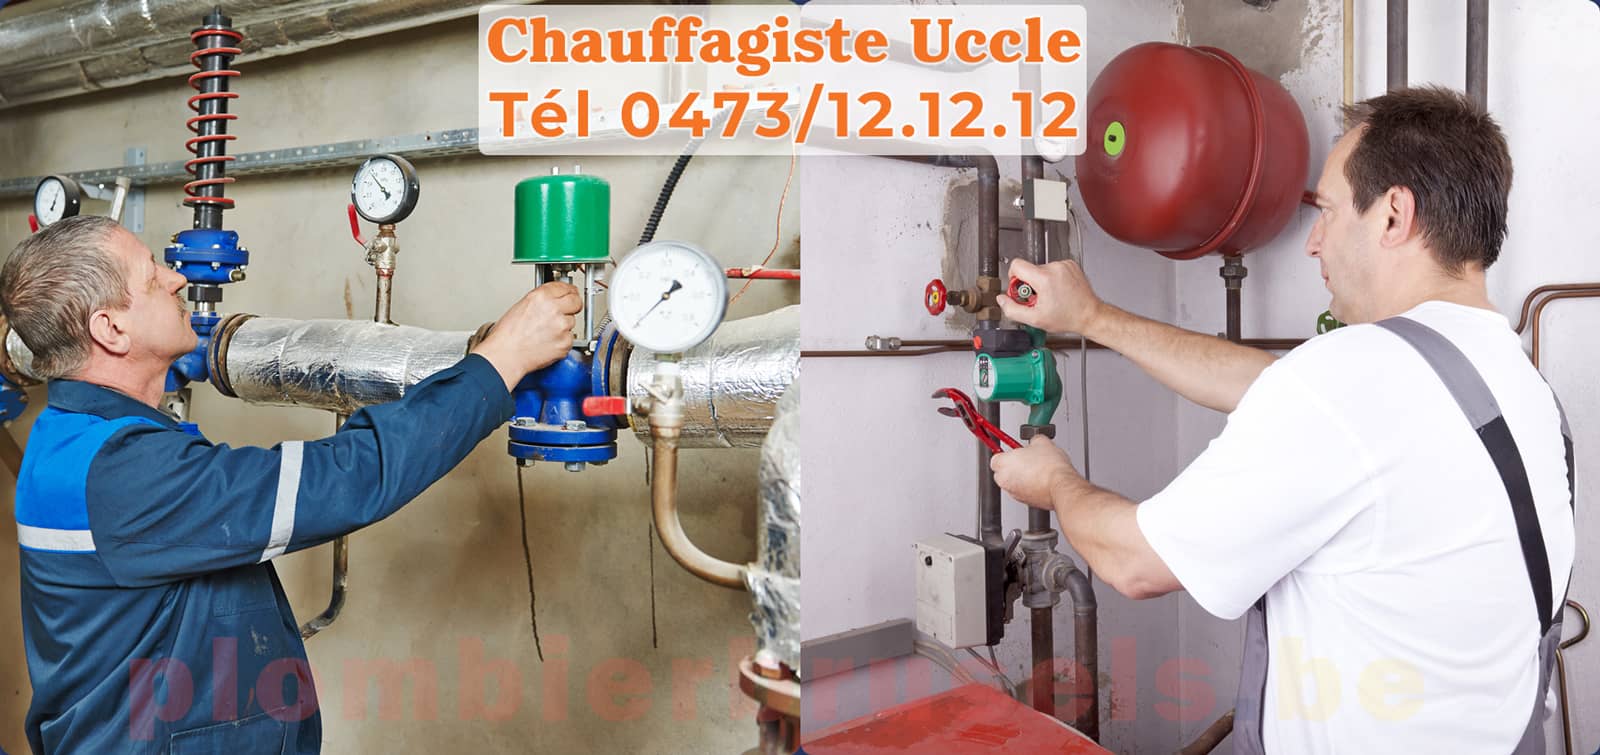 Chauffagiste Uccle service de Chauffage tél 0473/12.12.12